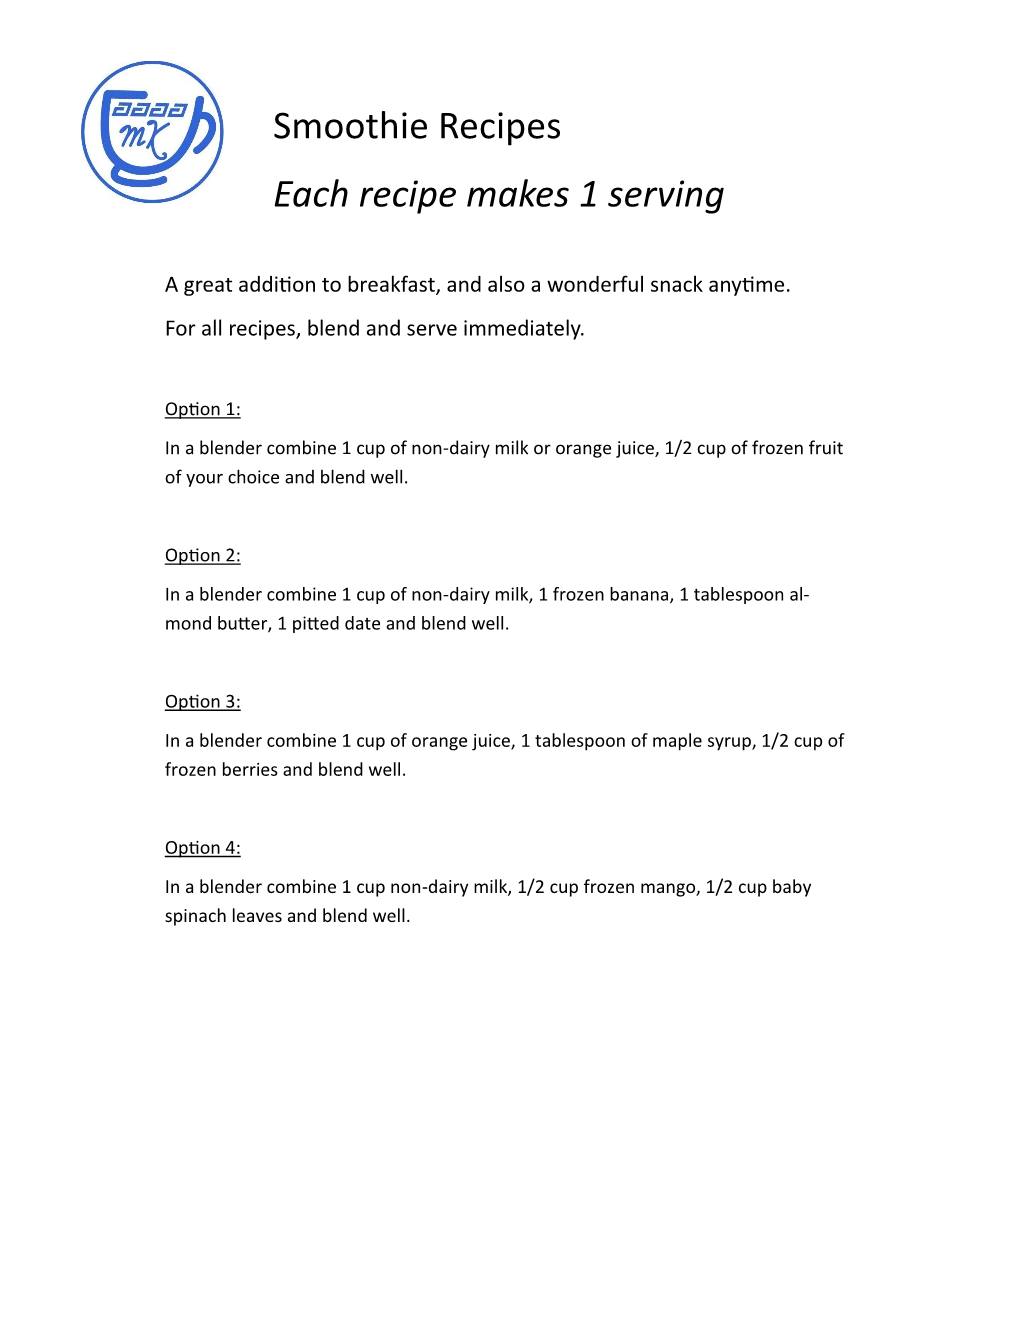 Smoothie Recipes Each Recipe Makes 1 Serving